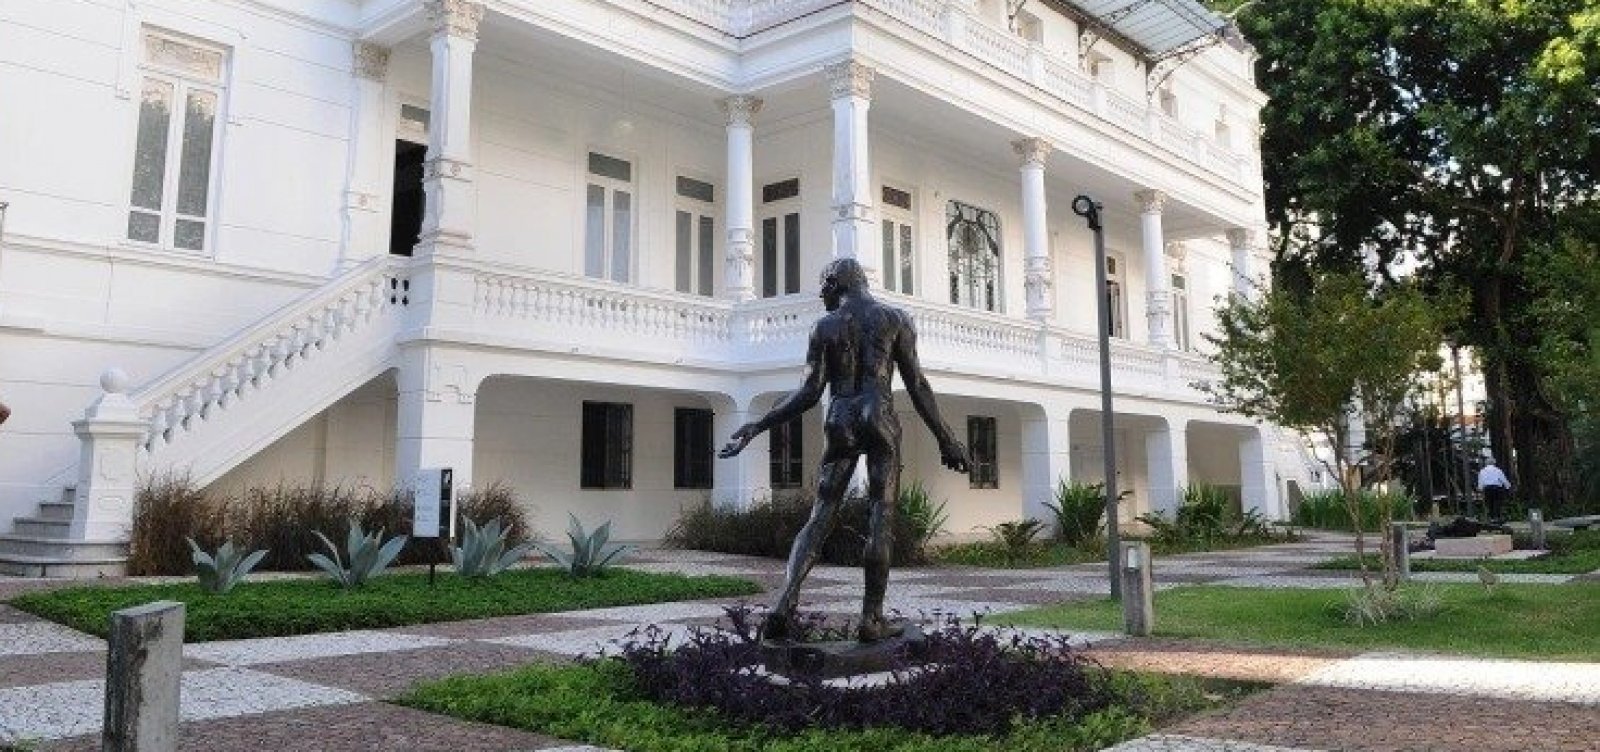 Antigo Rodin Bahia, Palacete das Artes agora vai virar Museu de Arte Contemporânea